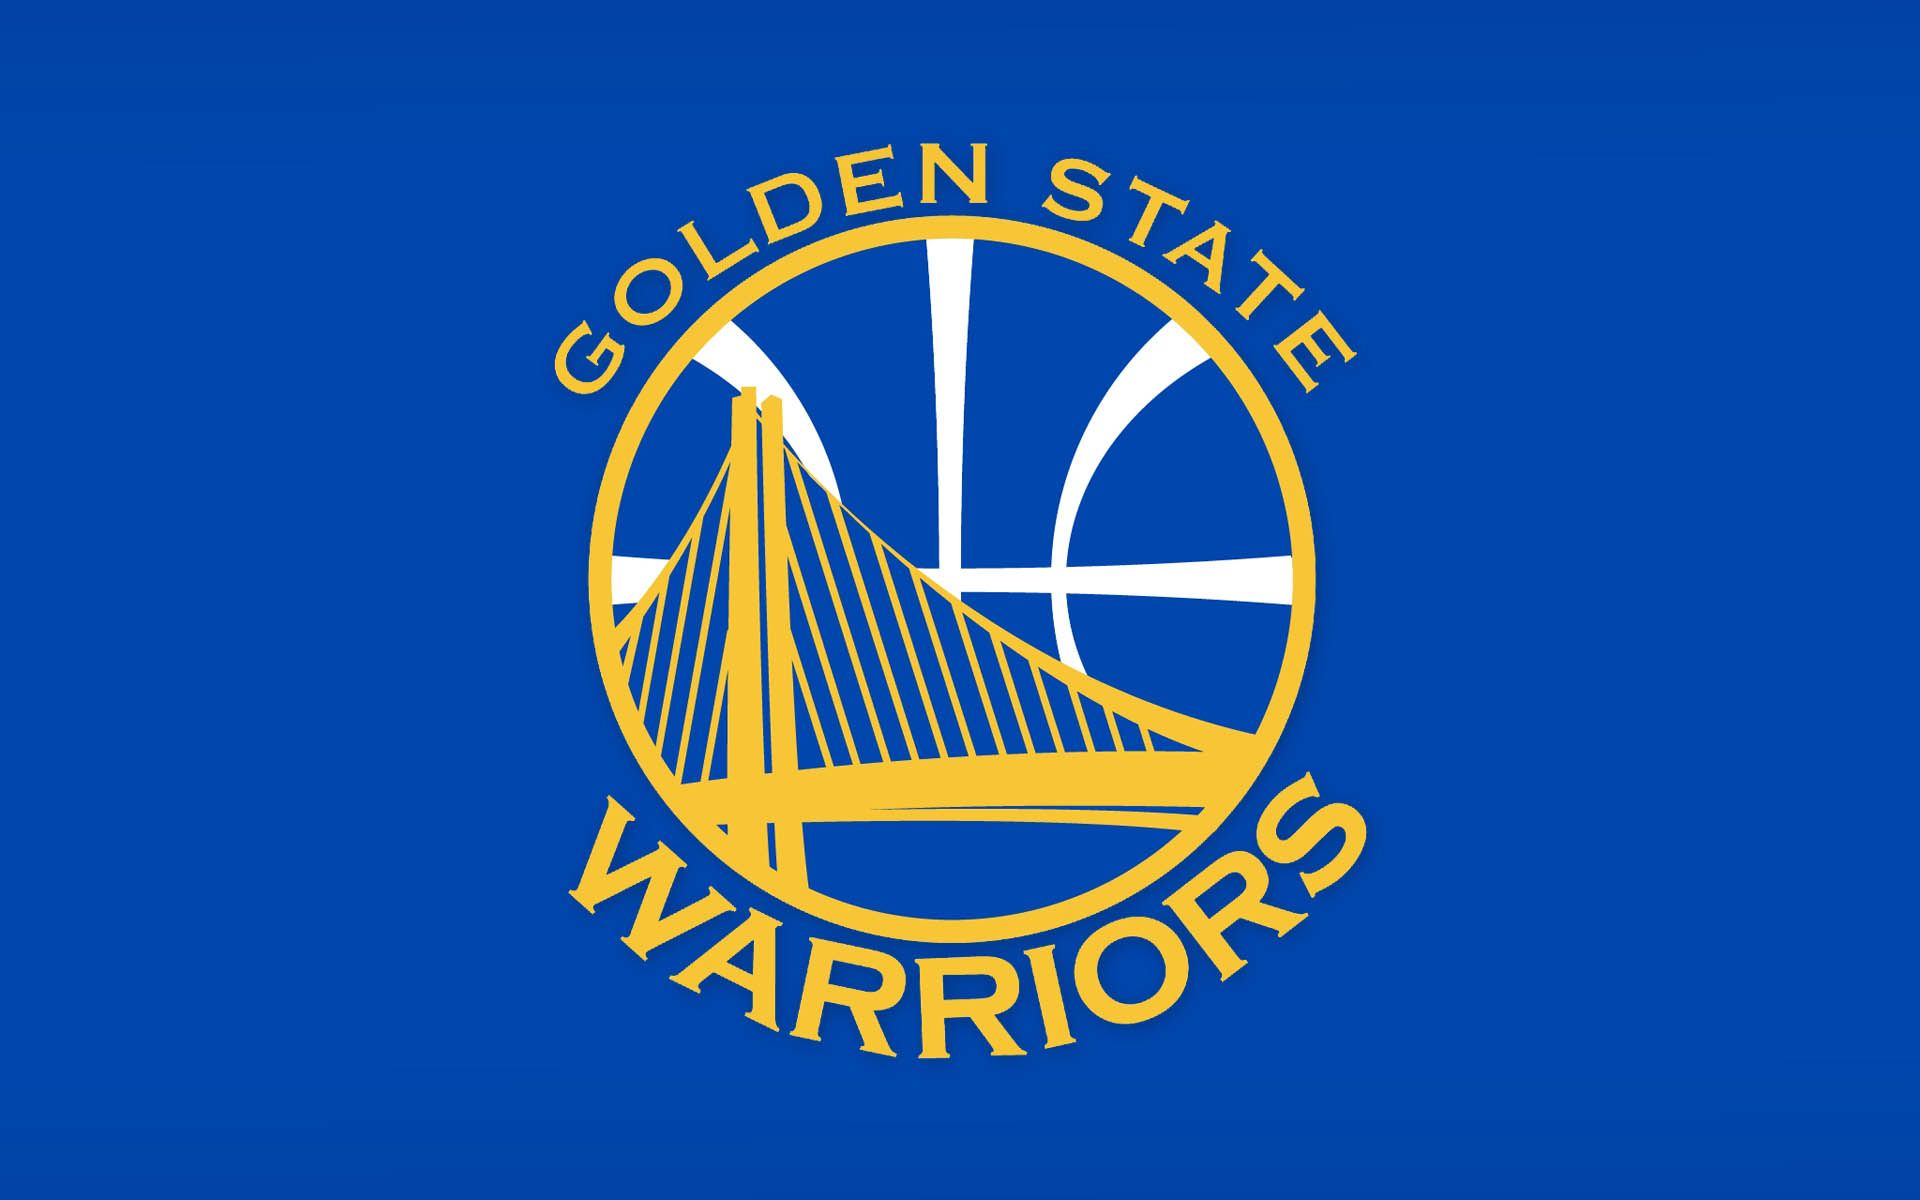 1920x1200 Golden State Warriors Logo Wallpapers Top Free Golden State Warriors Logo Backgrounds